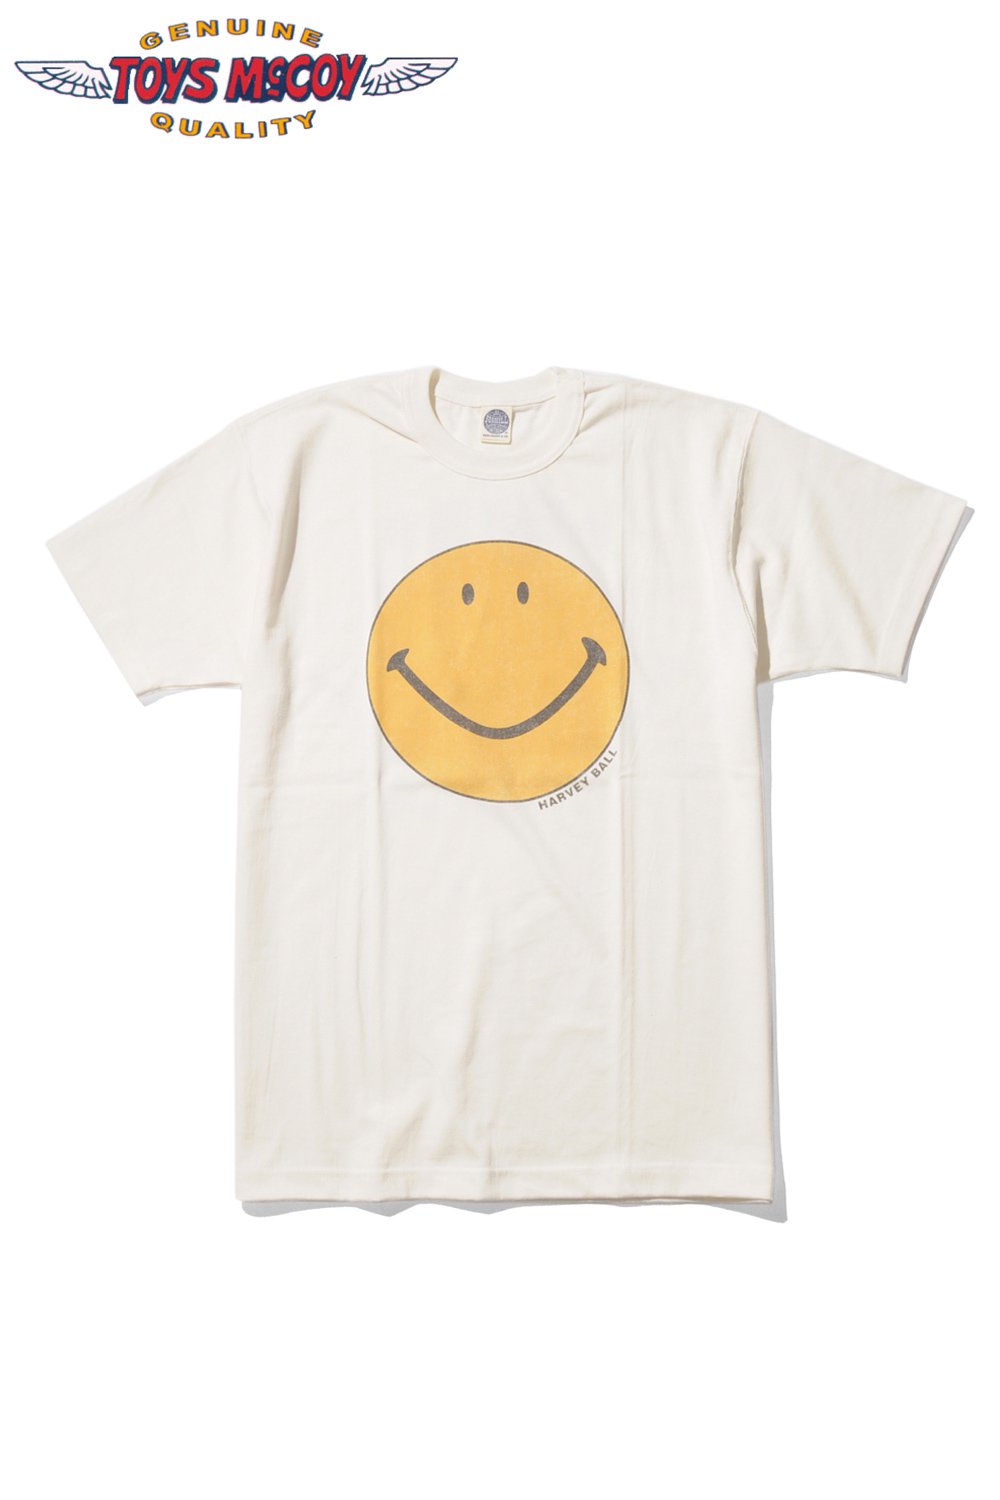 TOYS McCOY(トイズマッコイ) Tシャツ SMILE TEE "WE SMILE MORE" TMC1802 通販正規取扱 | ハーレムストア